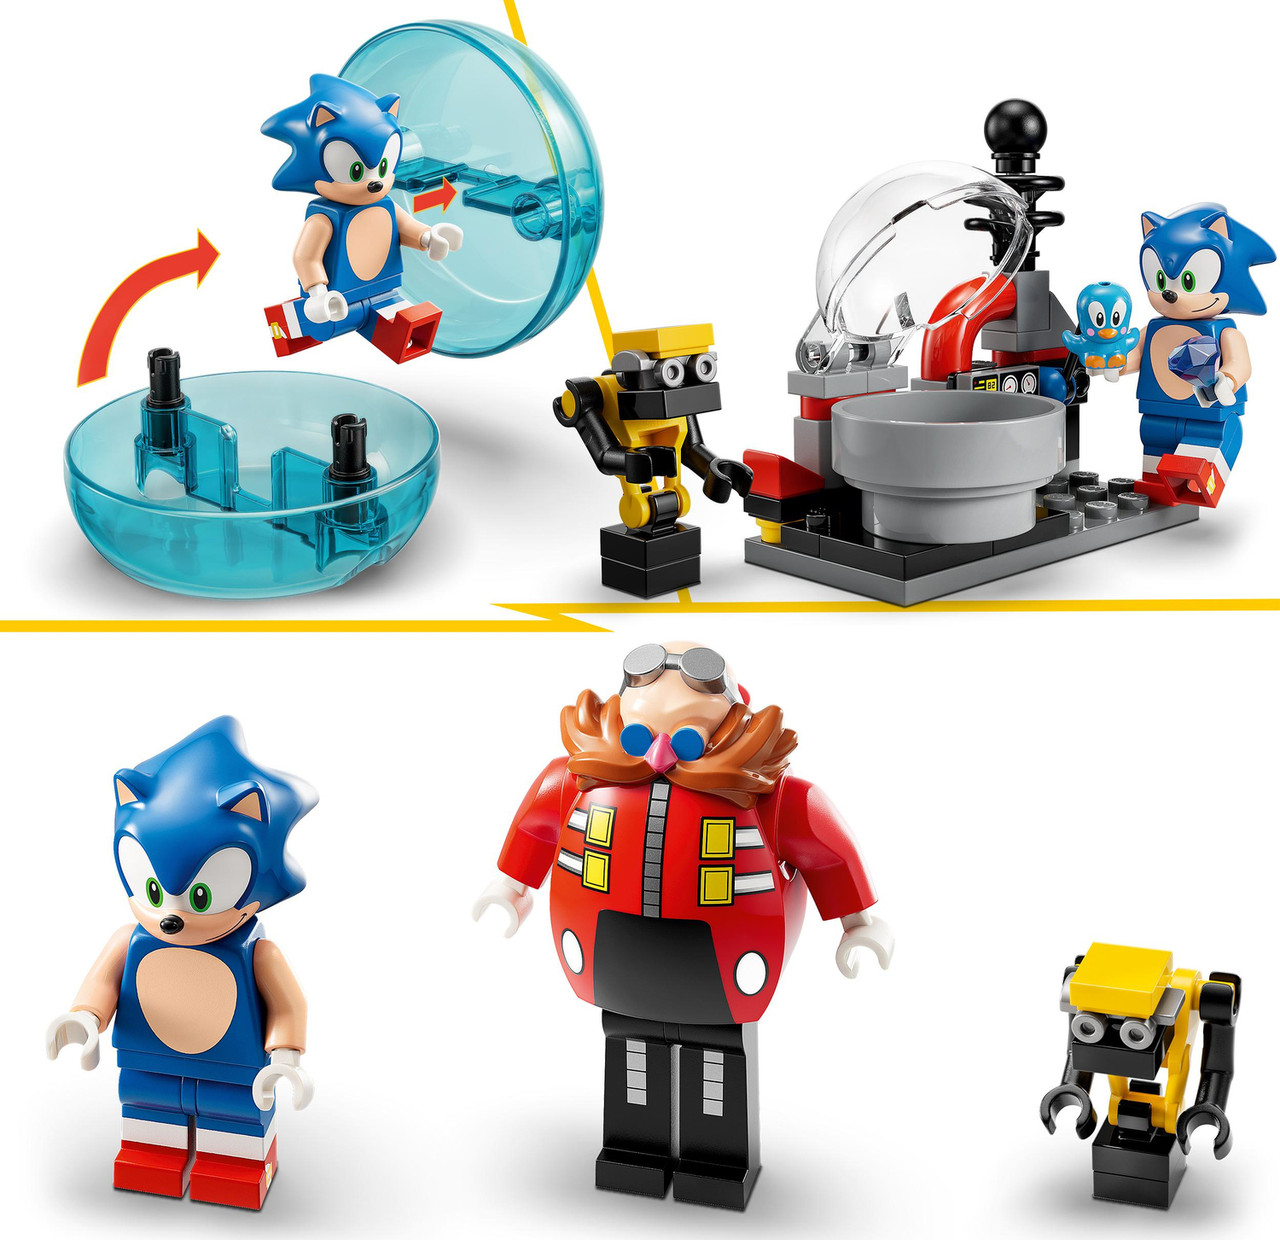 Sonic x LEGO - New Playsets & Dr. Eggman Segment